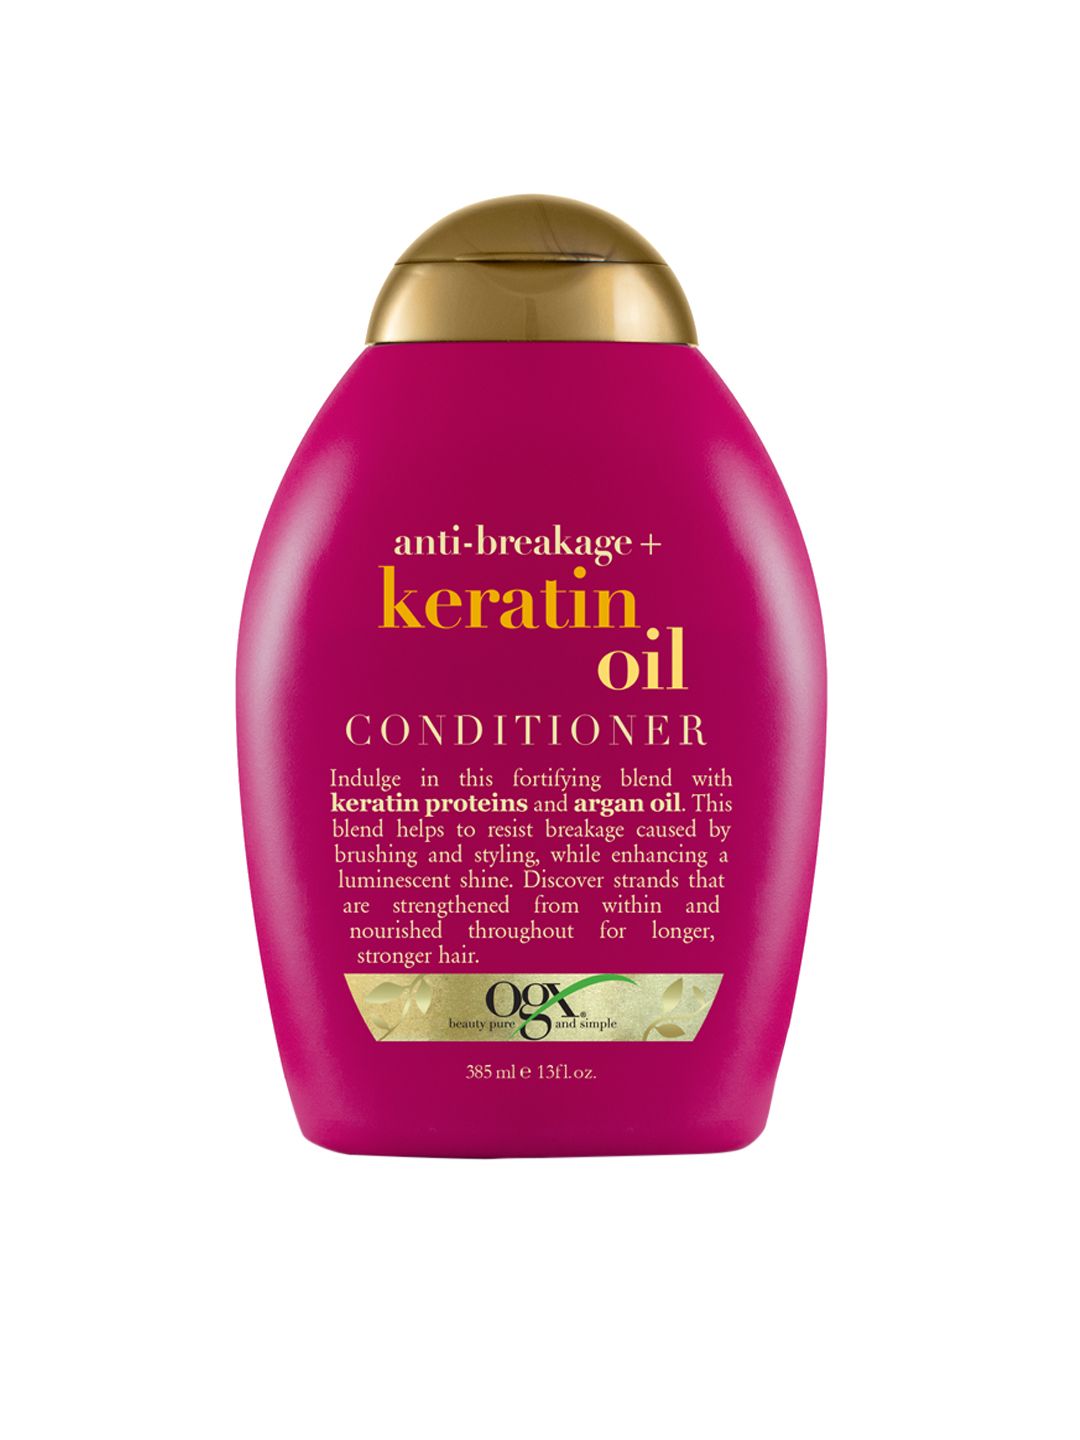 OGX Anti-Breakage Keratin Oil Conditioner 385 ml Price in India